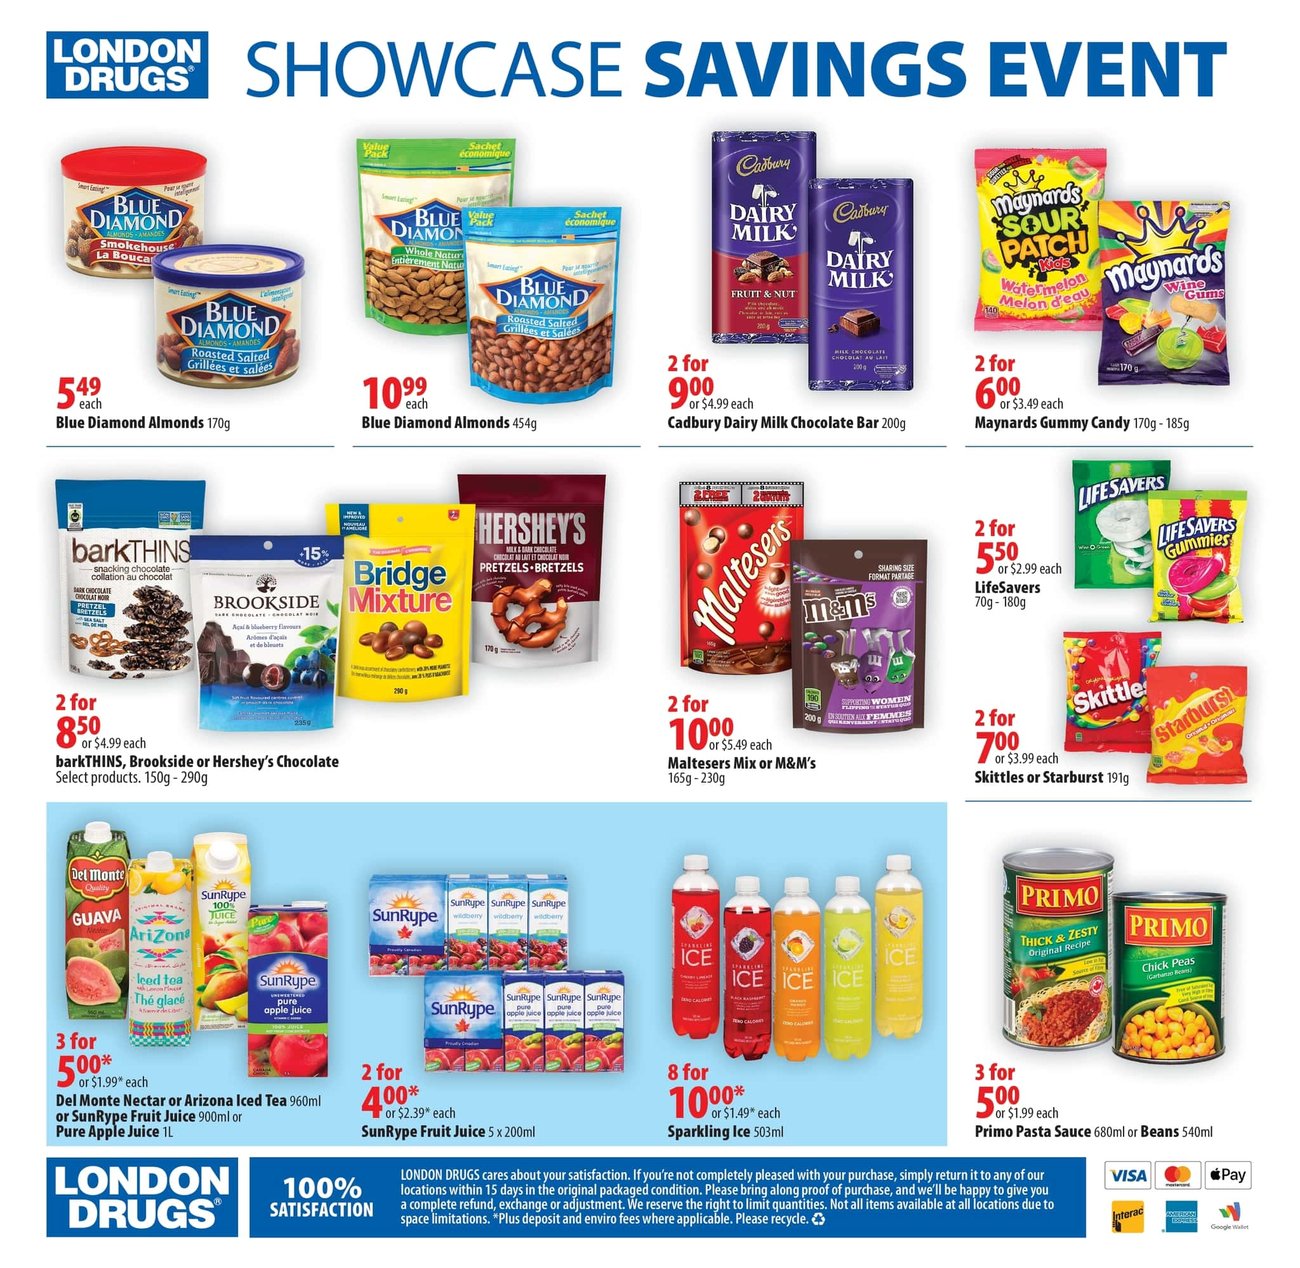 London Drugs - Showcase Savings Event - Page 8